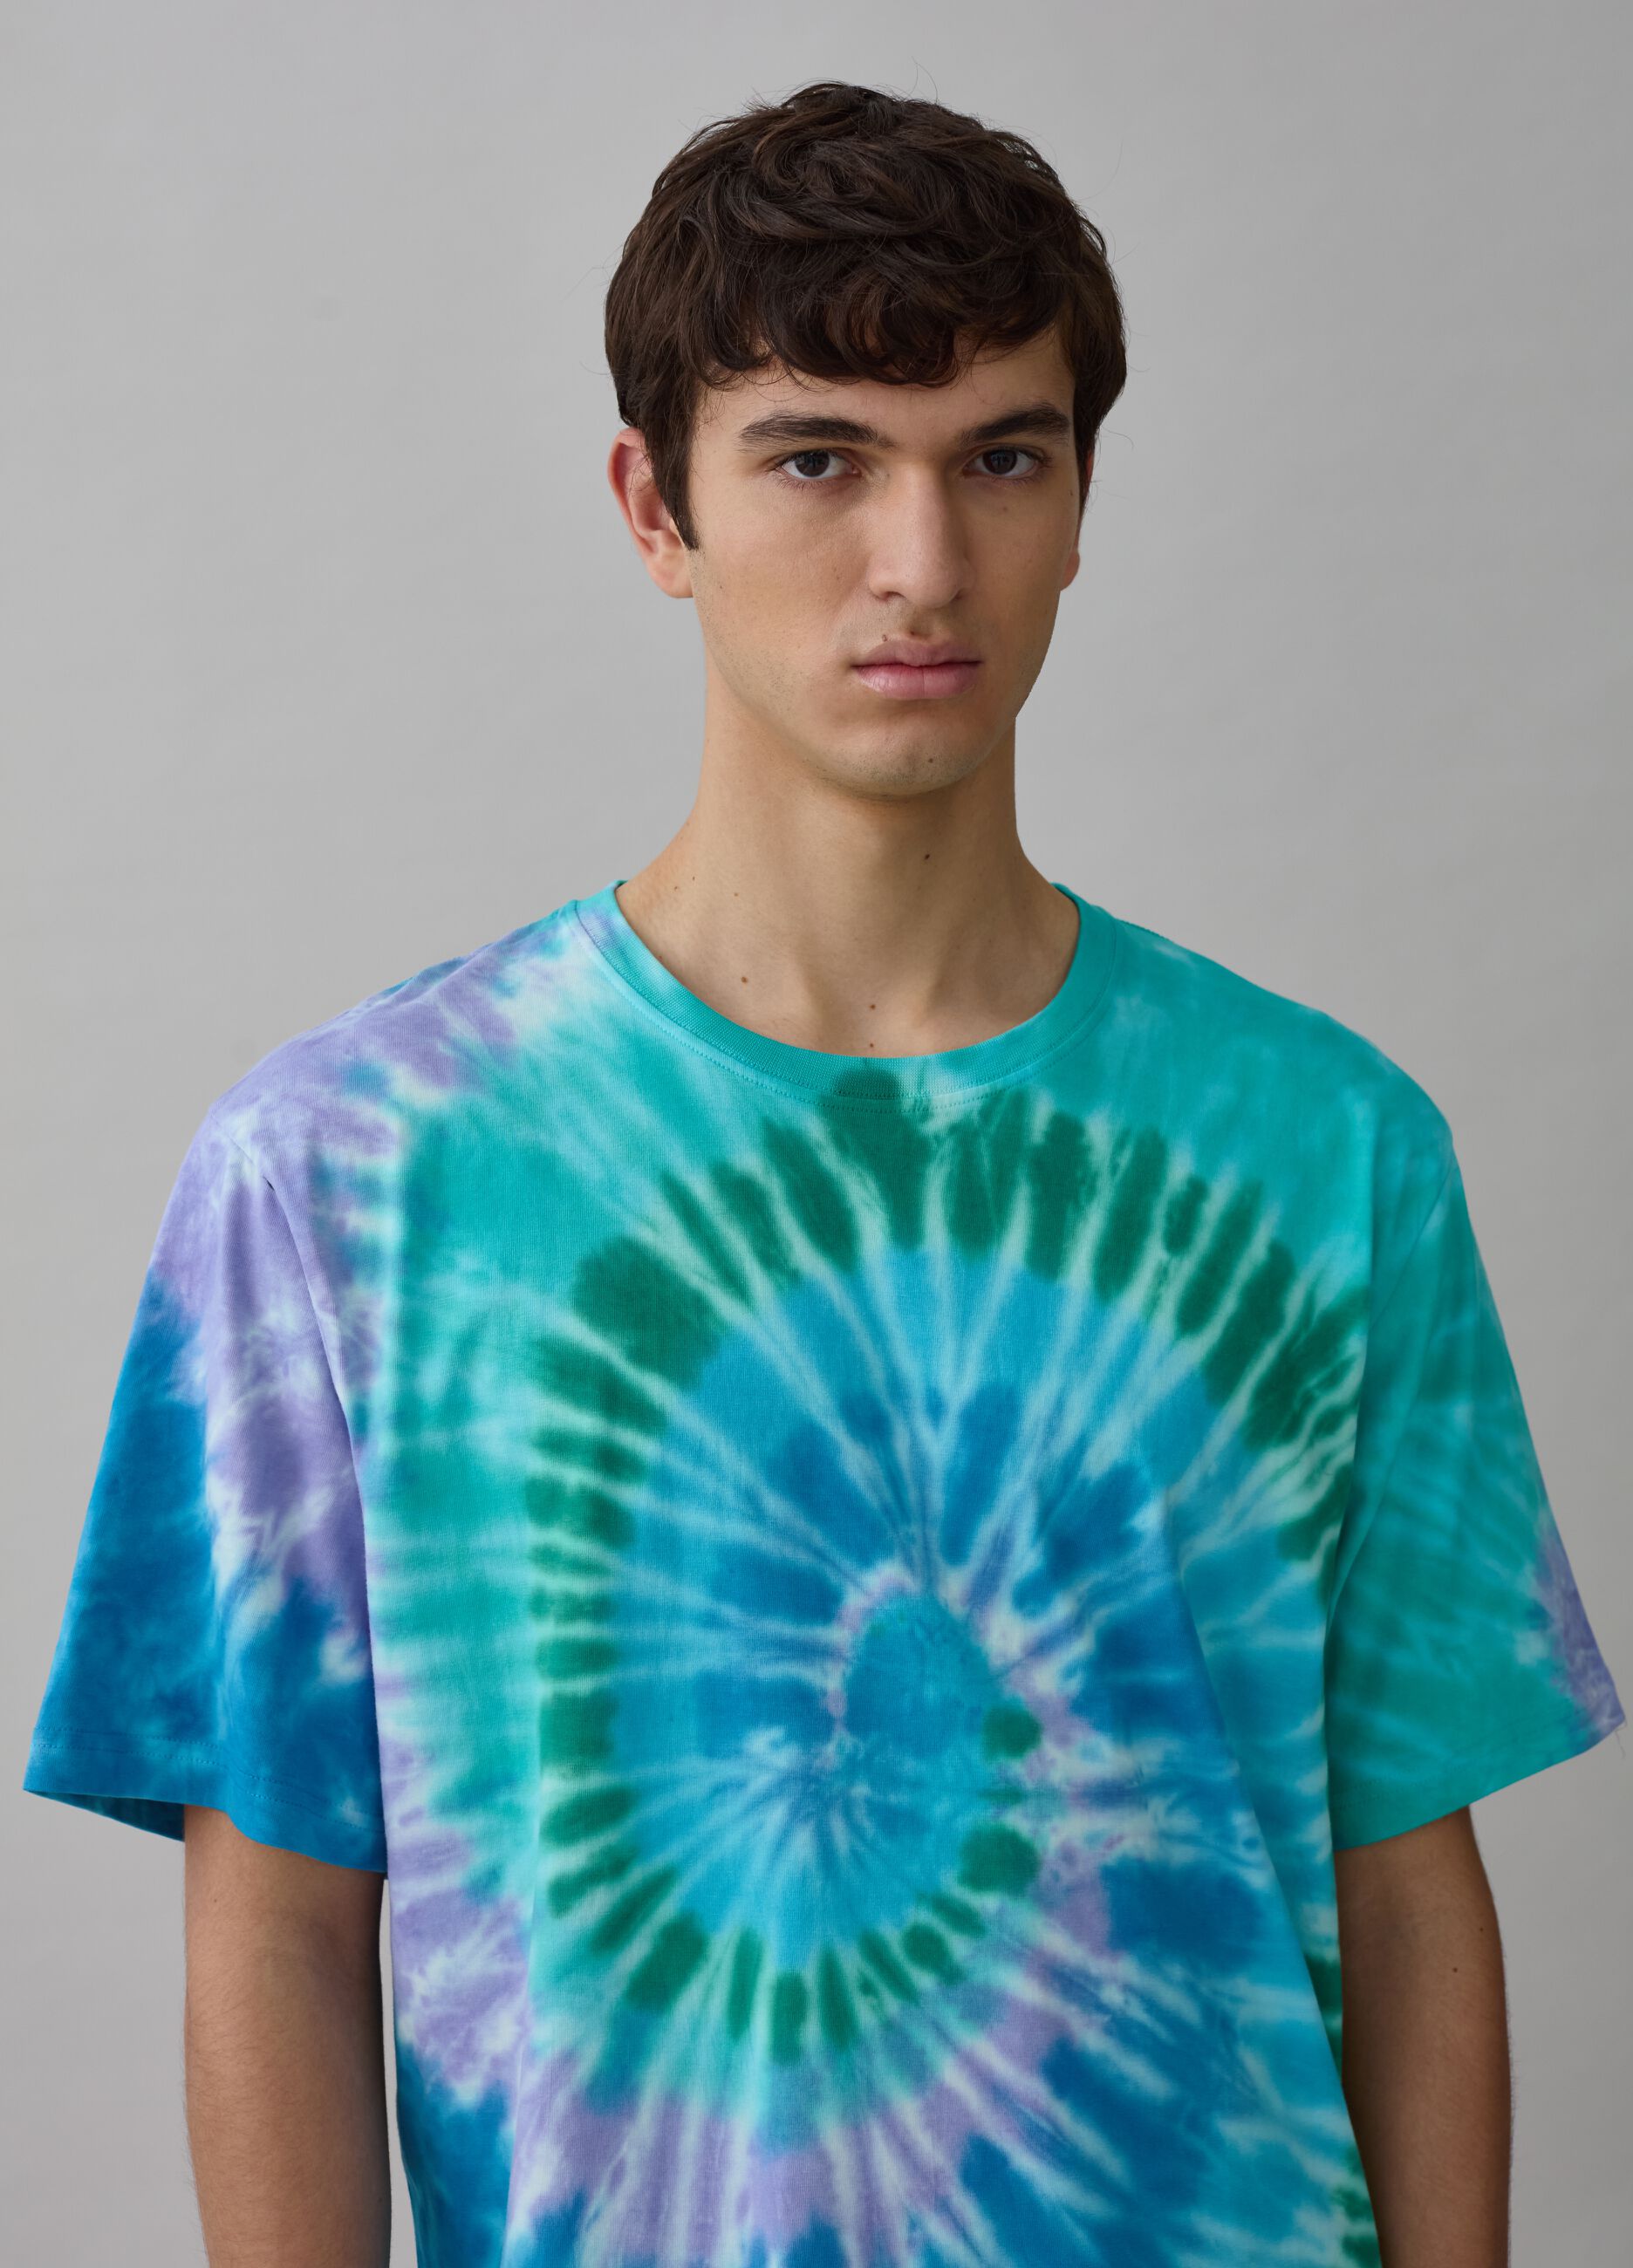 T-shirt in Tie Dye cotton